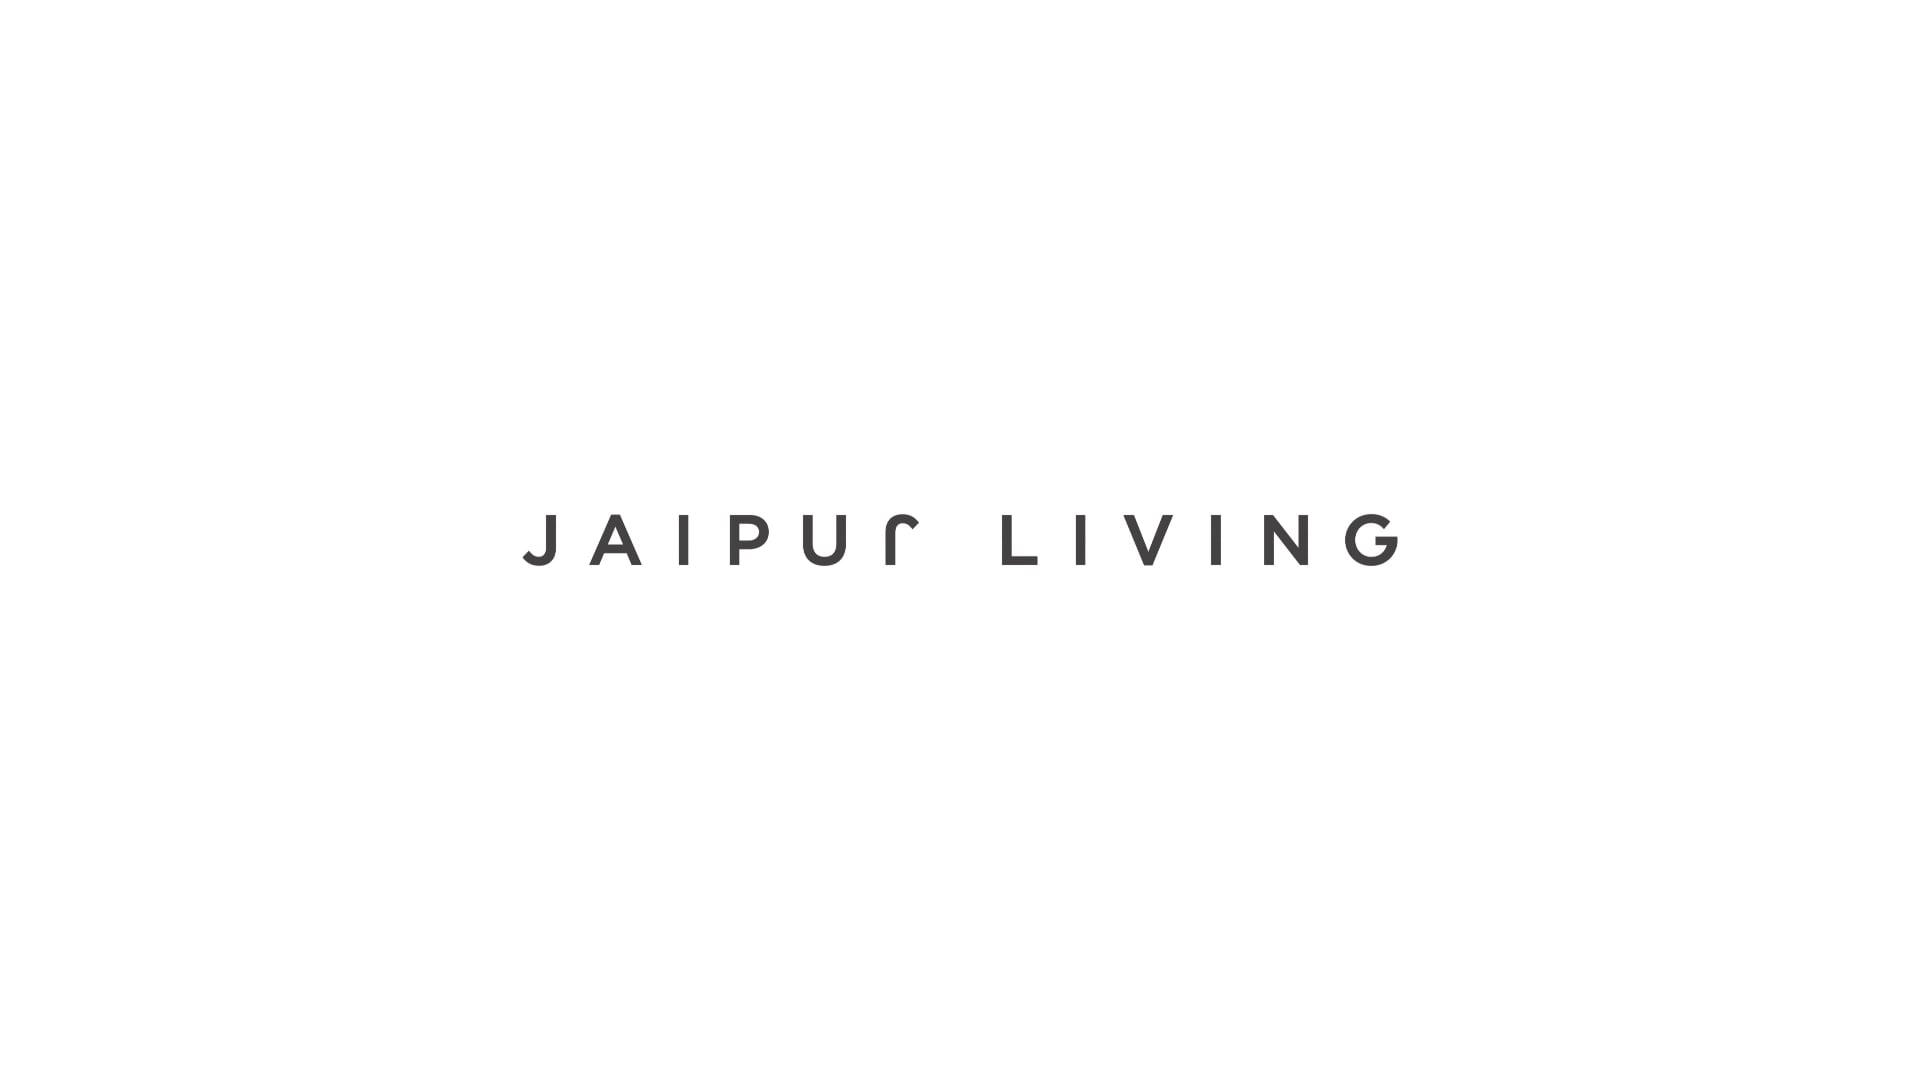 Jaipur Living Frise Indoor/Outdoor Geometric Ivory/Light Gray Area Rug, 8'x10'